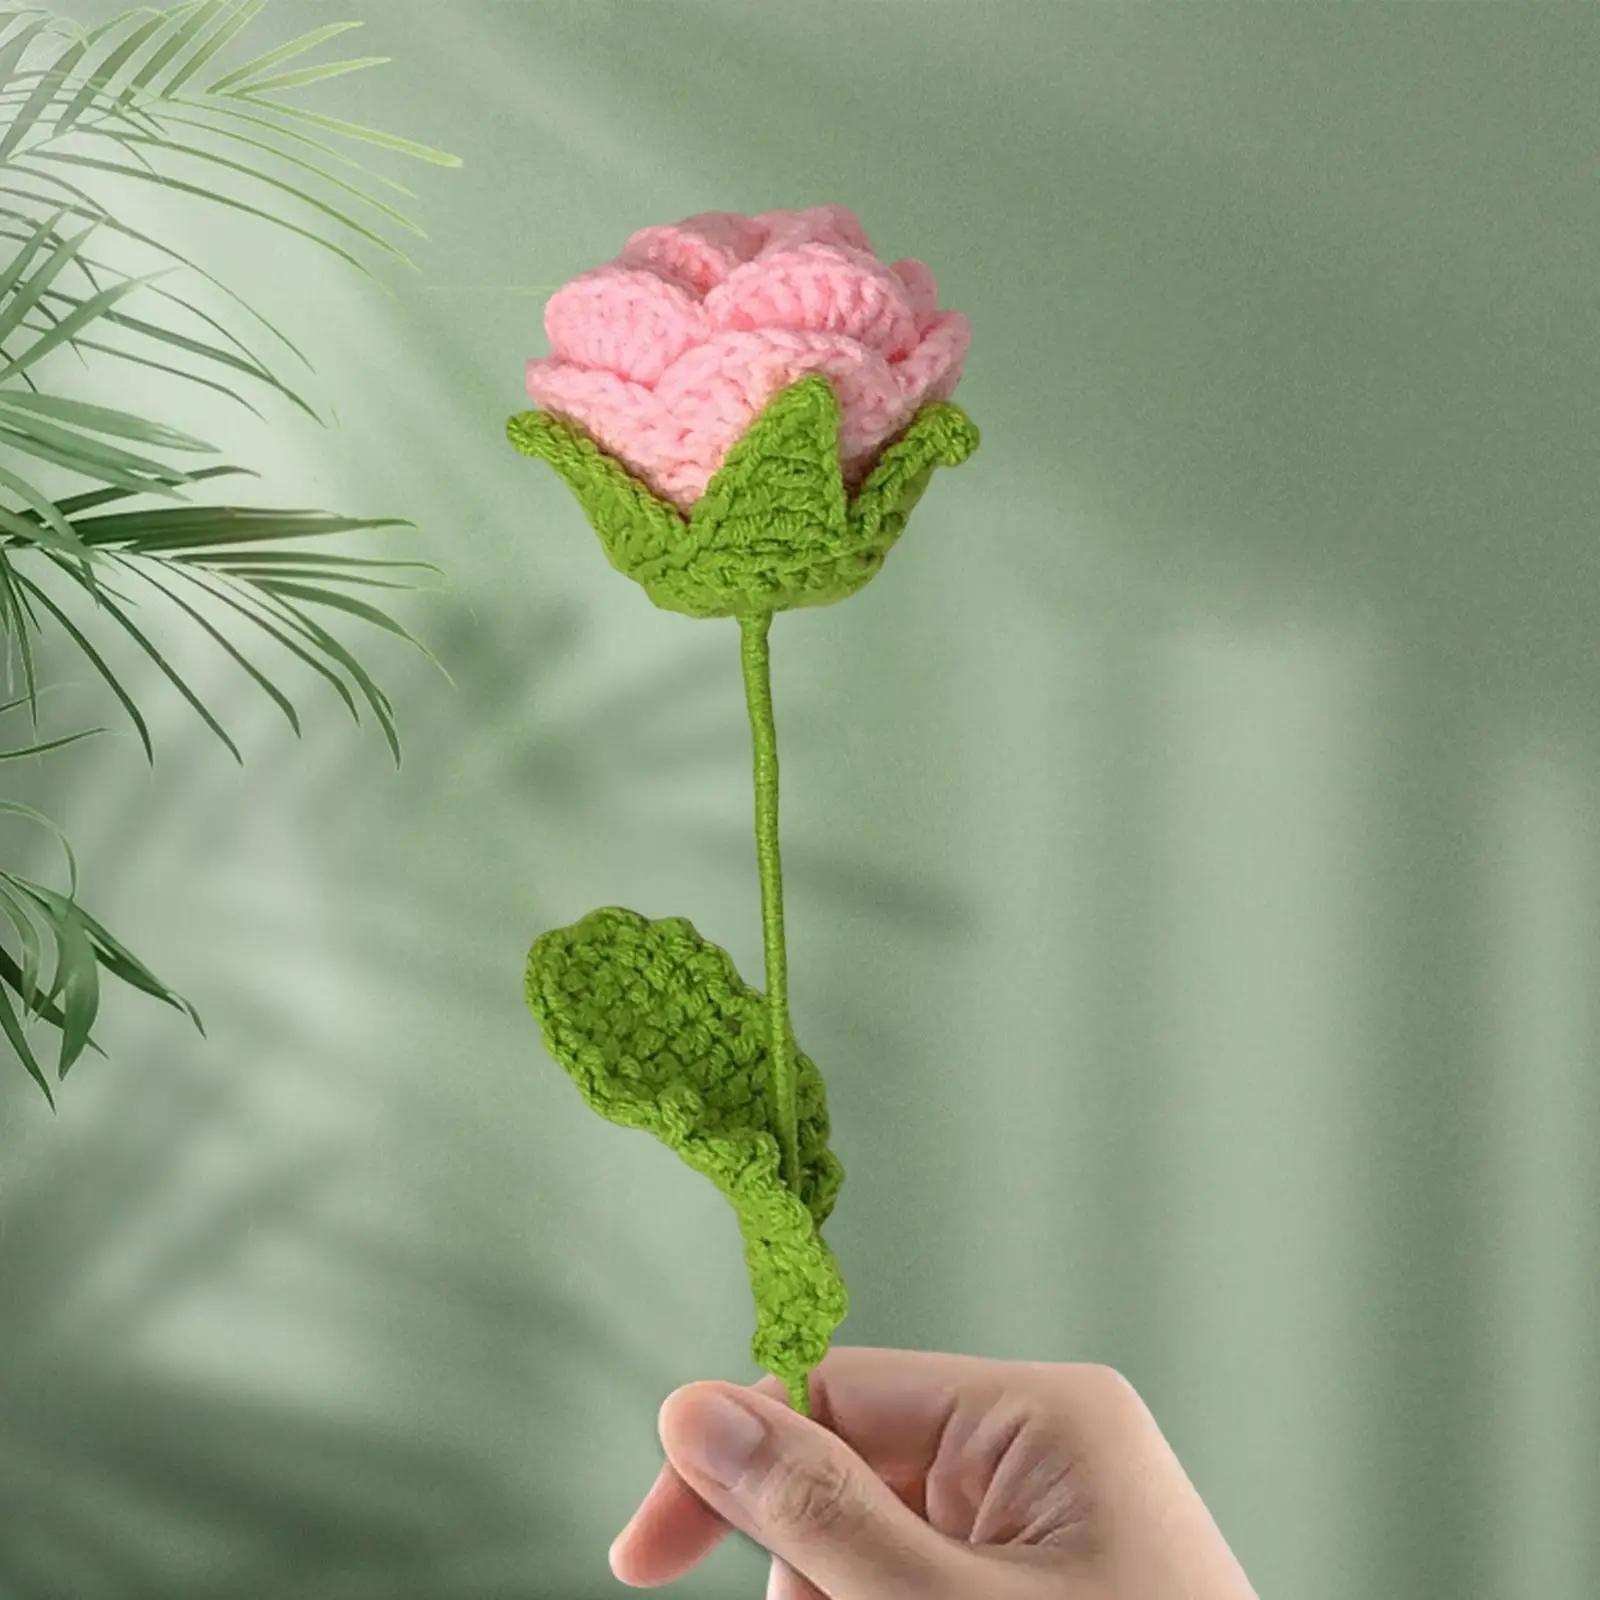 Crochet Rose Flower Artificial Flower Knitted Flower Handmade Unique for Celebrations Dating Anniversaries Gift Daughter